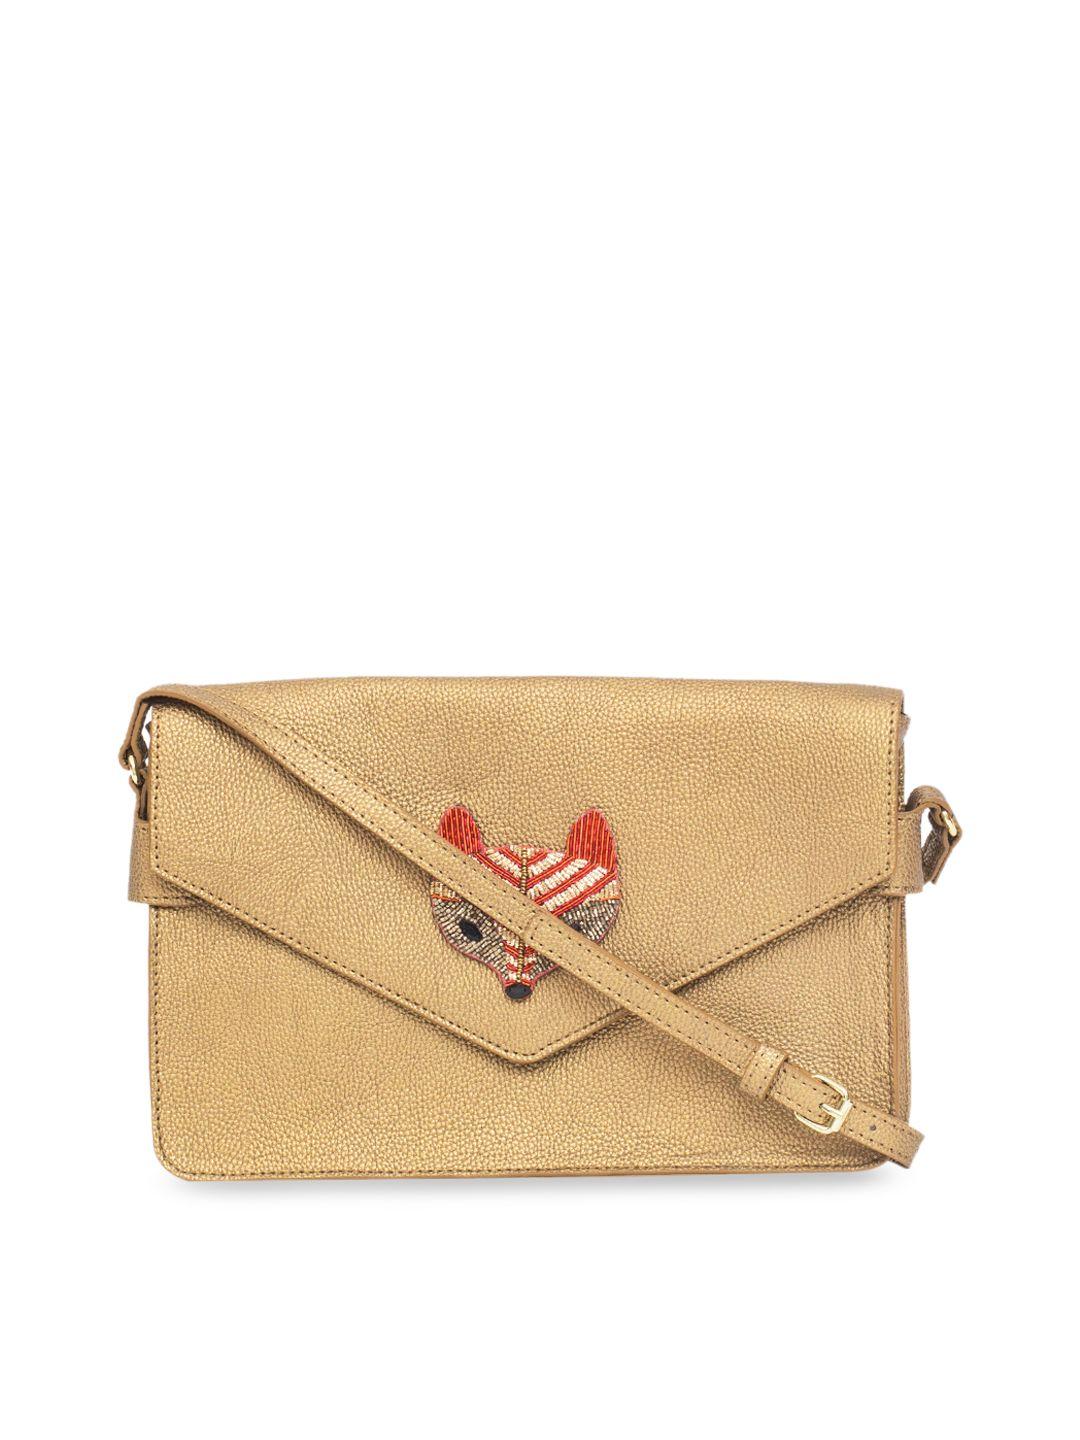 chumbak gold-toned textured sling bag